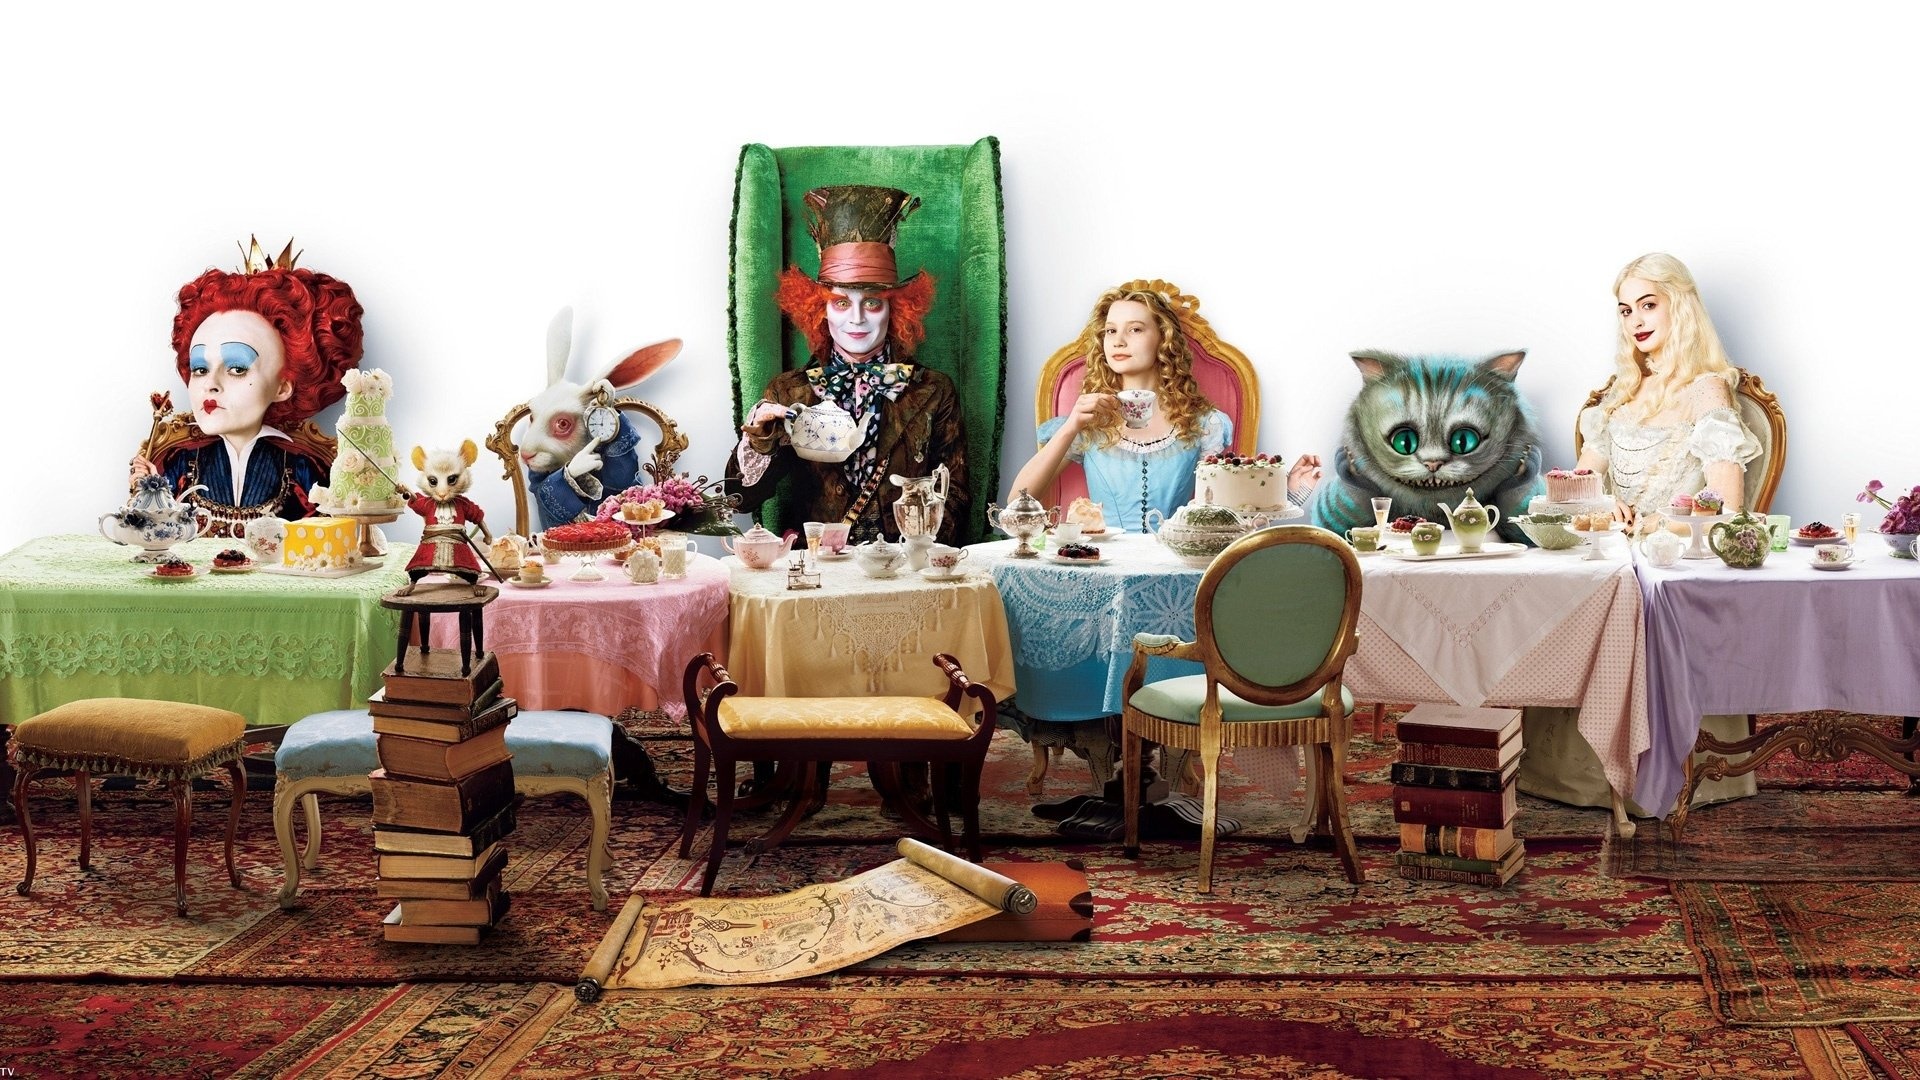 White Queen, Alice in Wonderland, HD wallpapers, Background images, 1920x1080 Full HD Desktop